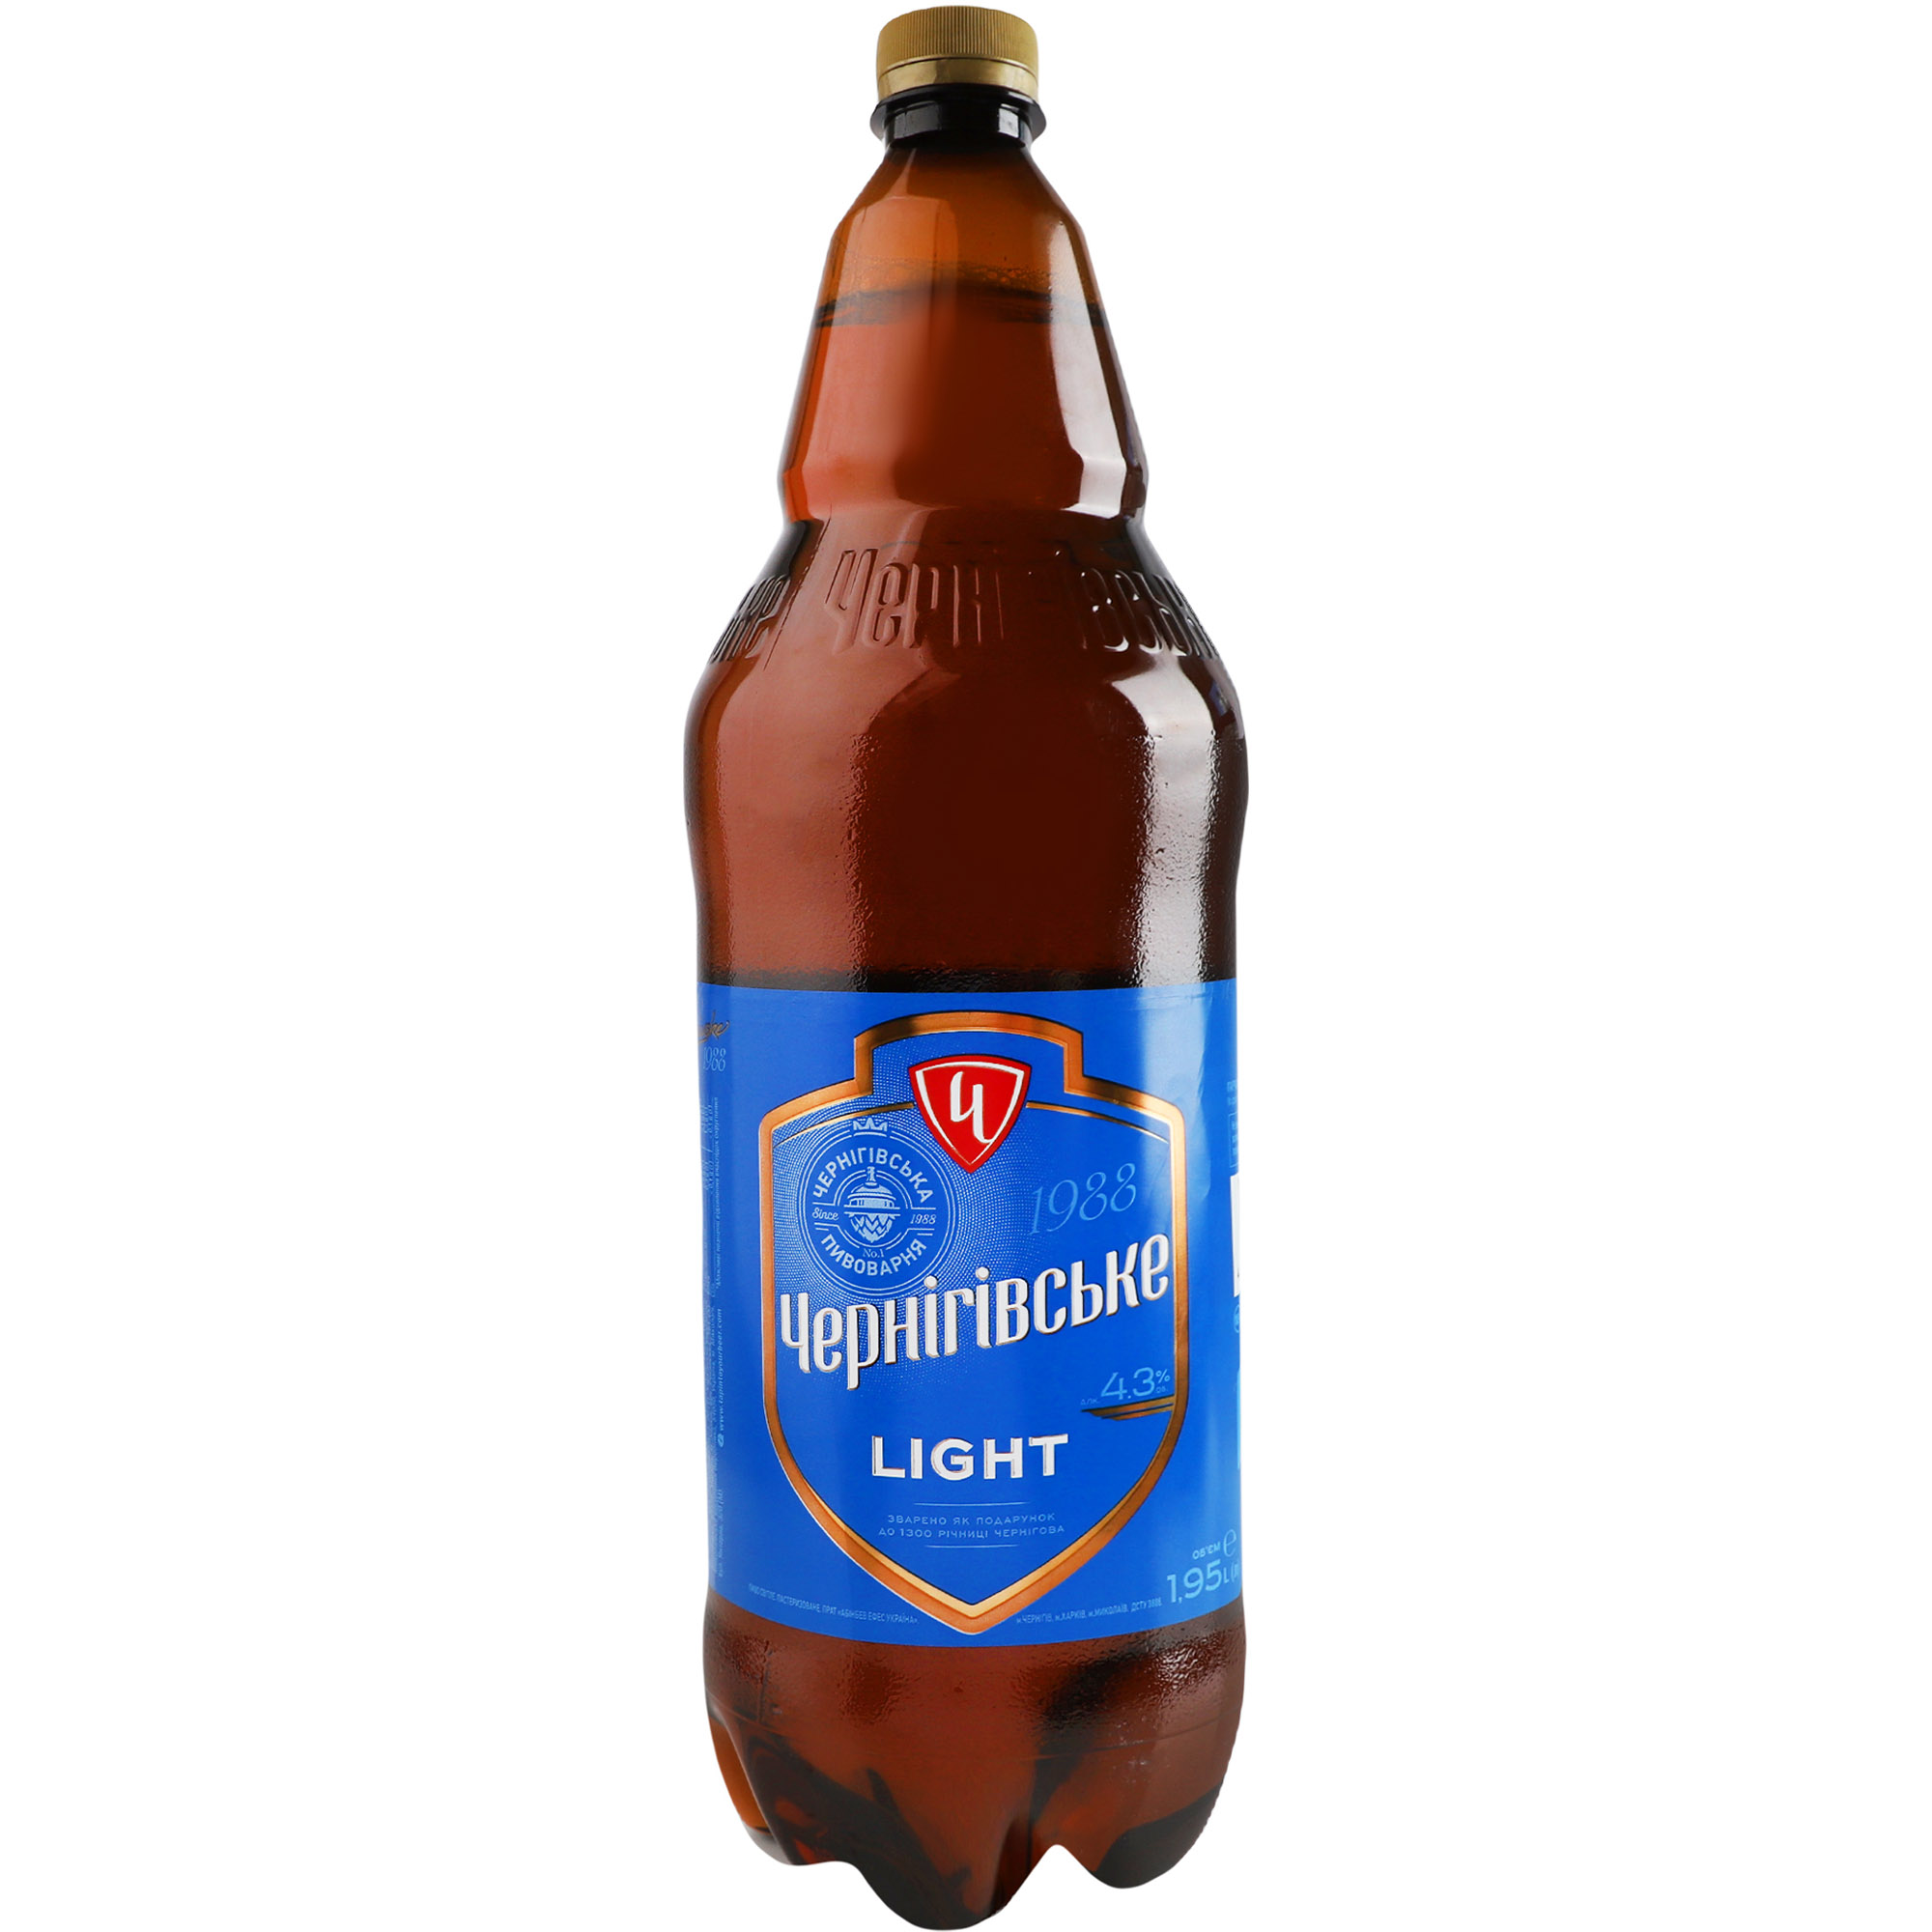 Пиво Чернігівське Light светлое 4.3% 1.95 л - фото 1